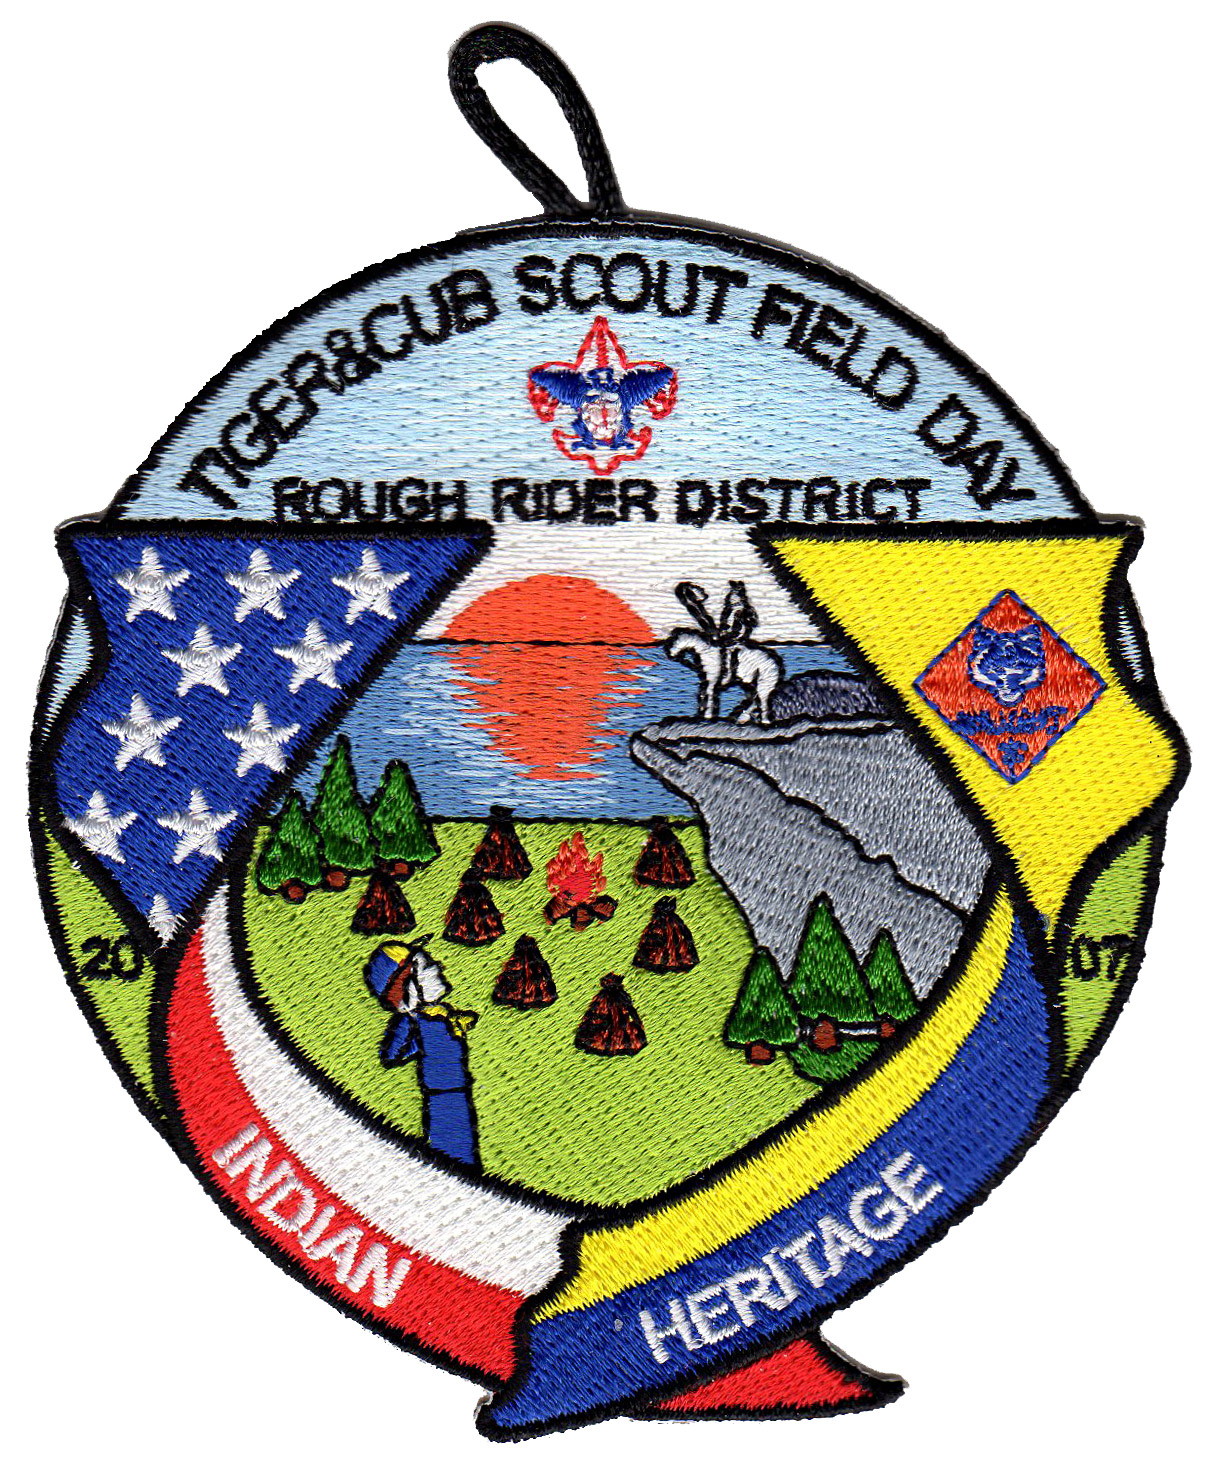 2007 Tiger-Cub Scout Field Day